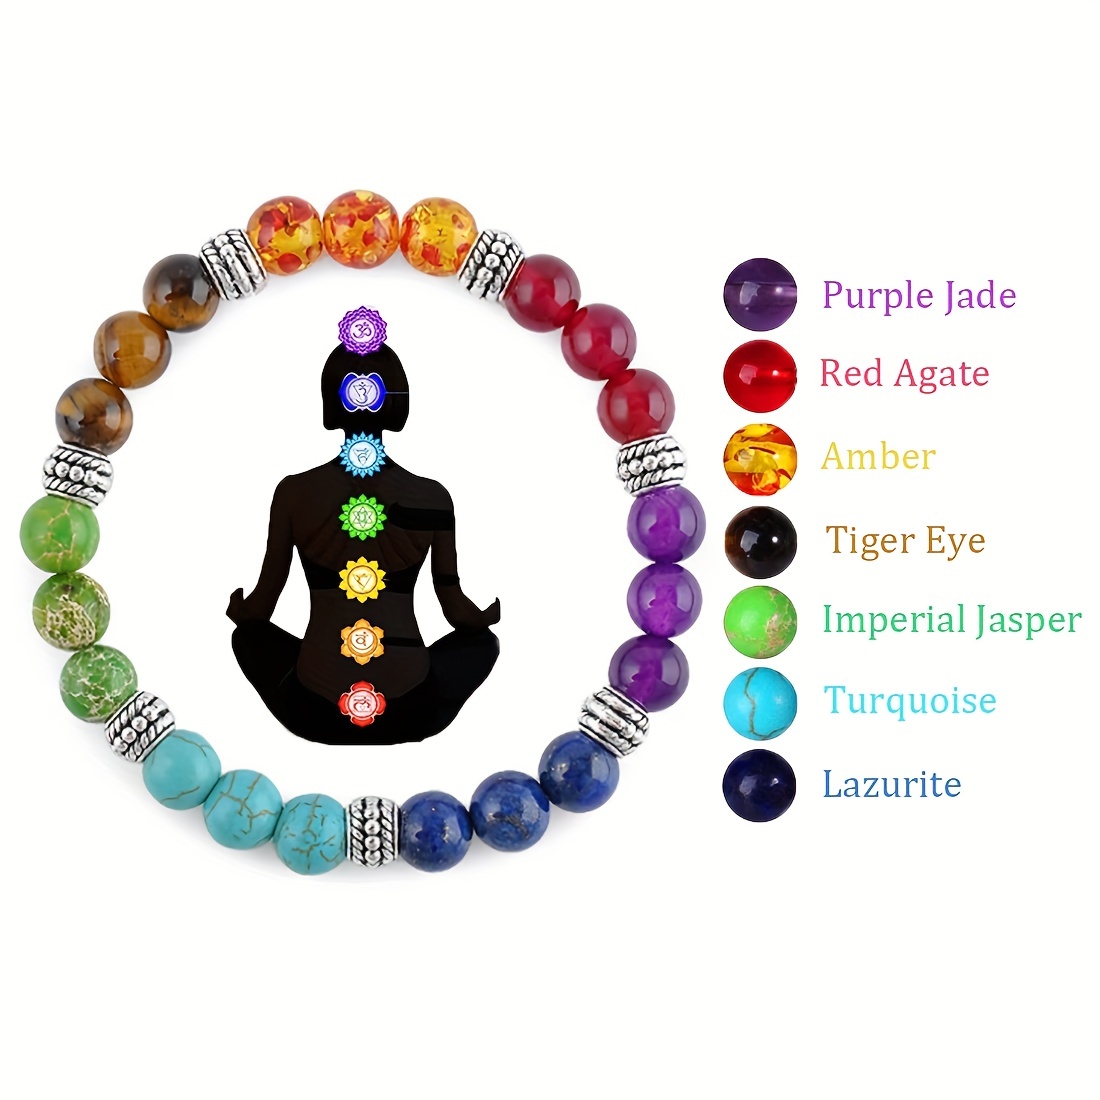 7 Chakras Lava Tiger Eye Anxiety Bracelet 2Pc Oil Stone Meditation